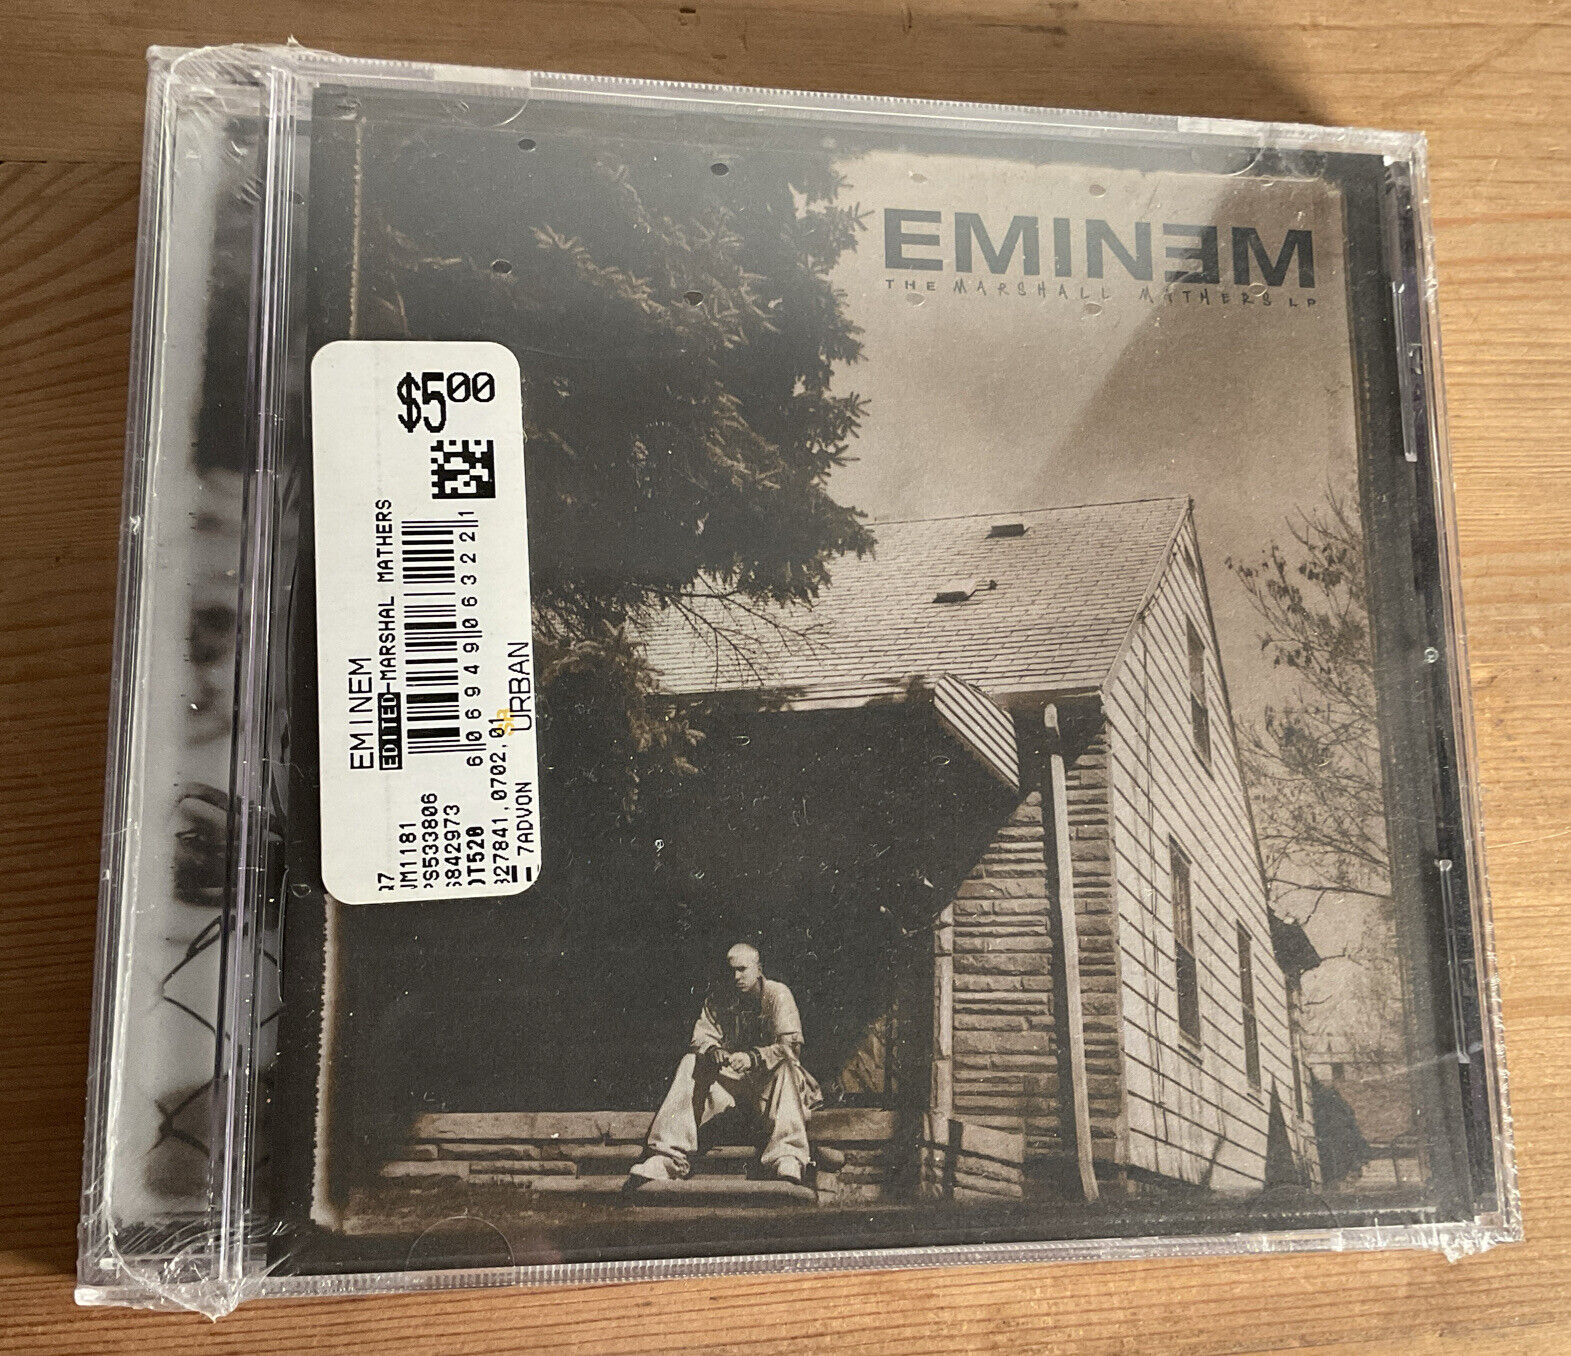 Eminem "The Marshall Mathers LP" (Clean/Edited Version) Mid-West Hardcore Rap